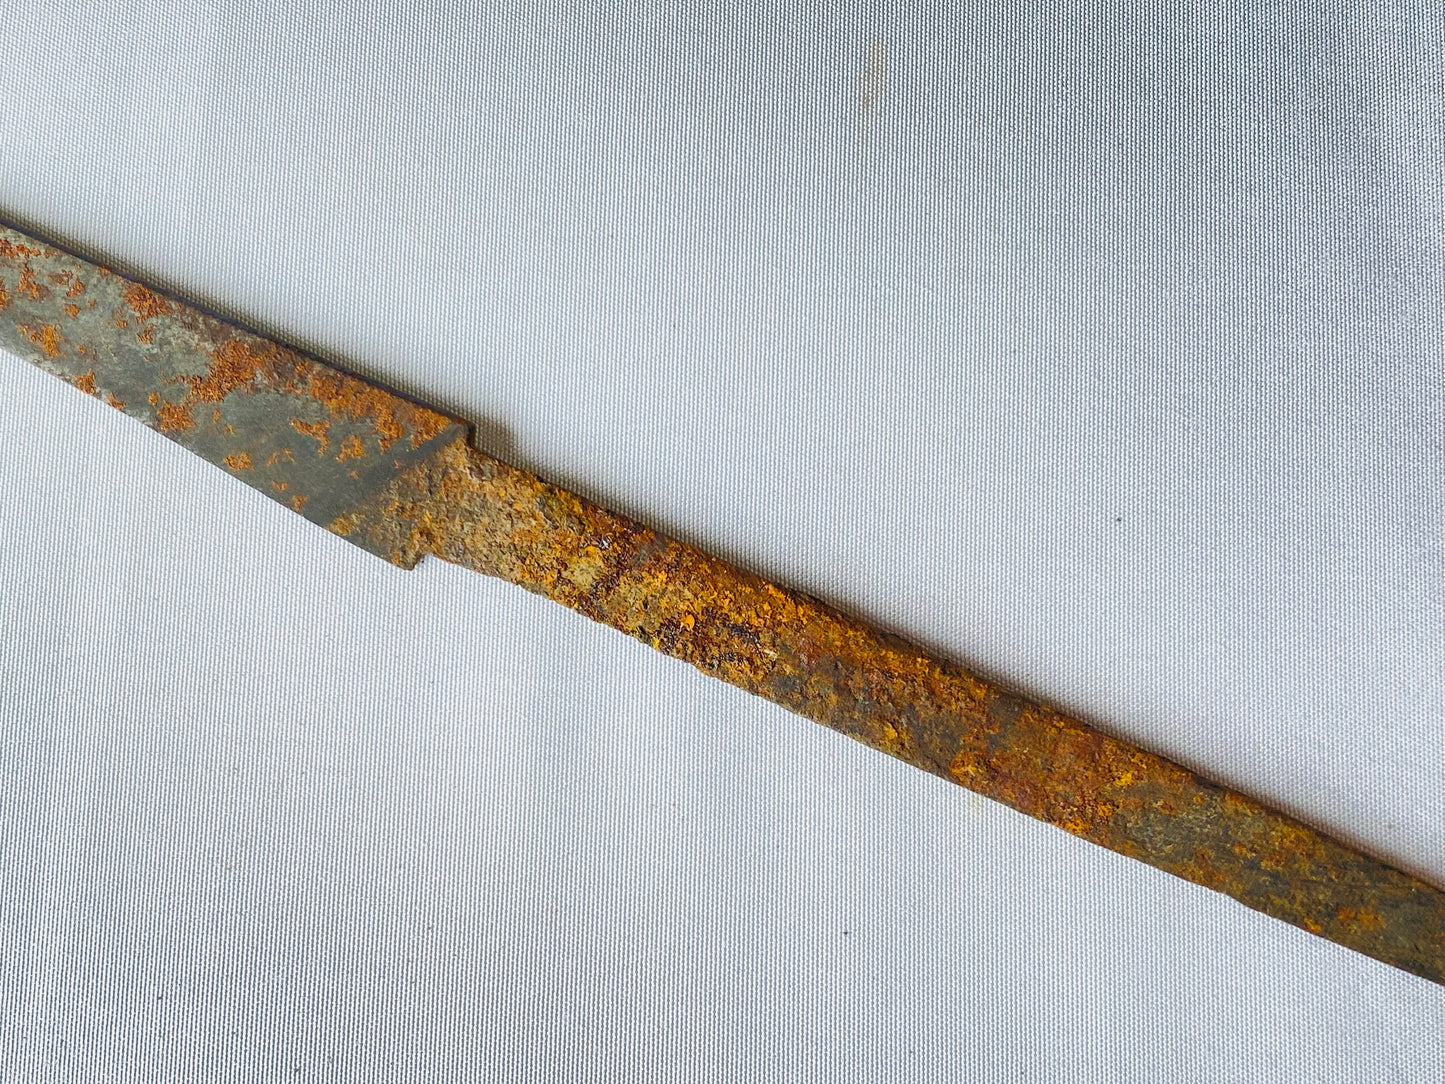 Y4565 TSUKA Kogatana small sword inlay people Japan Koshirae antique samu